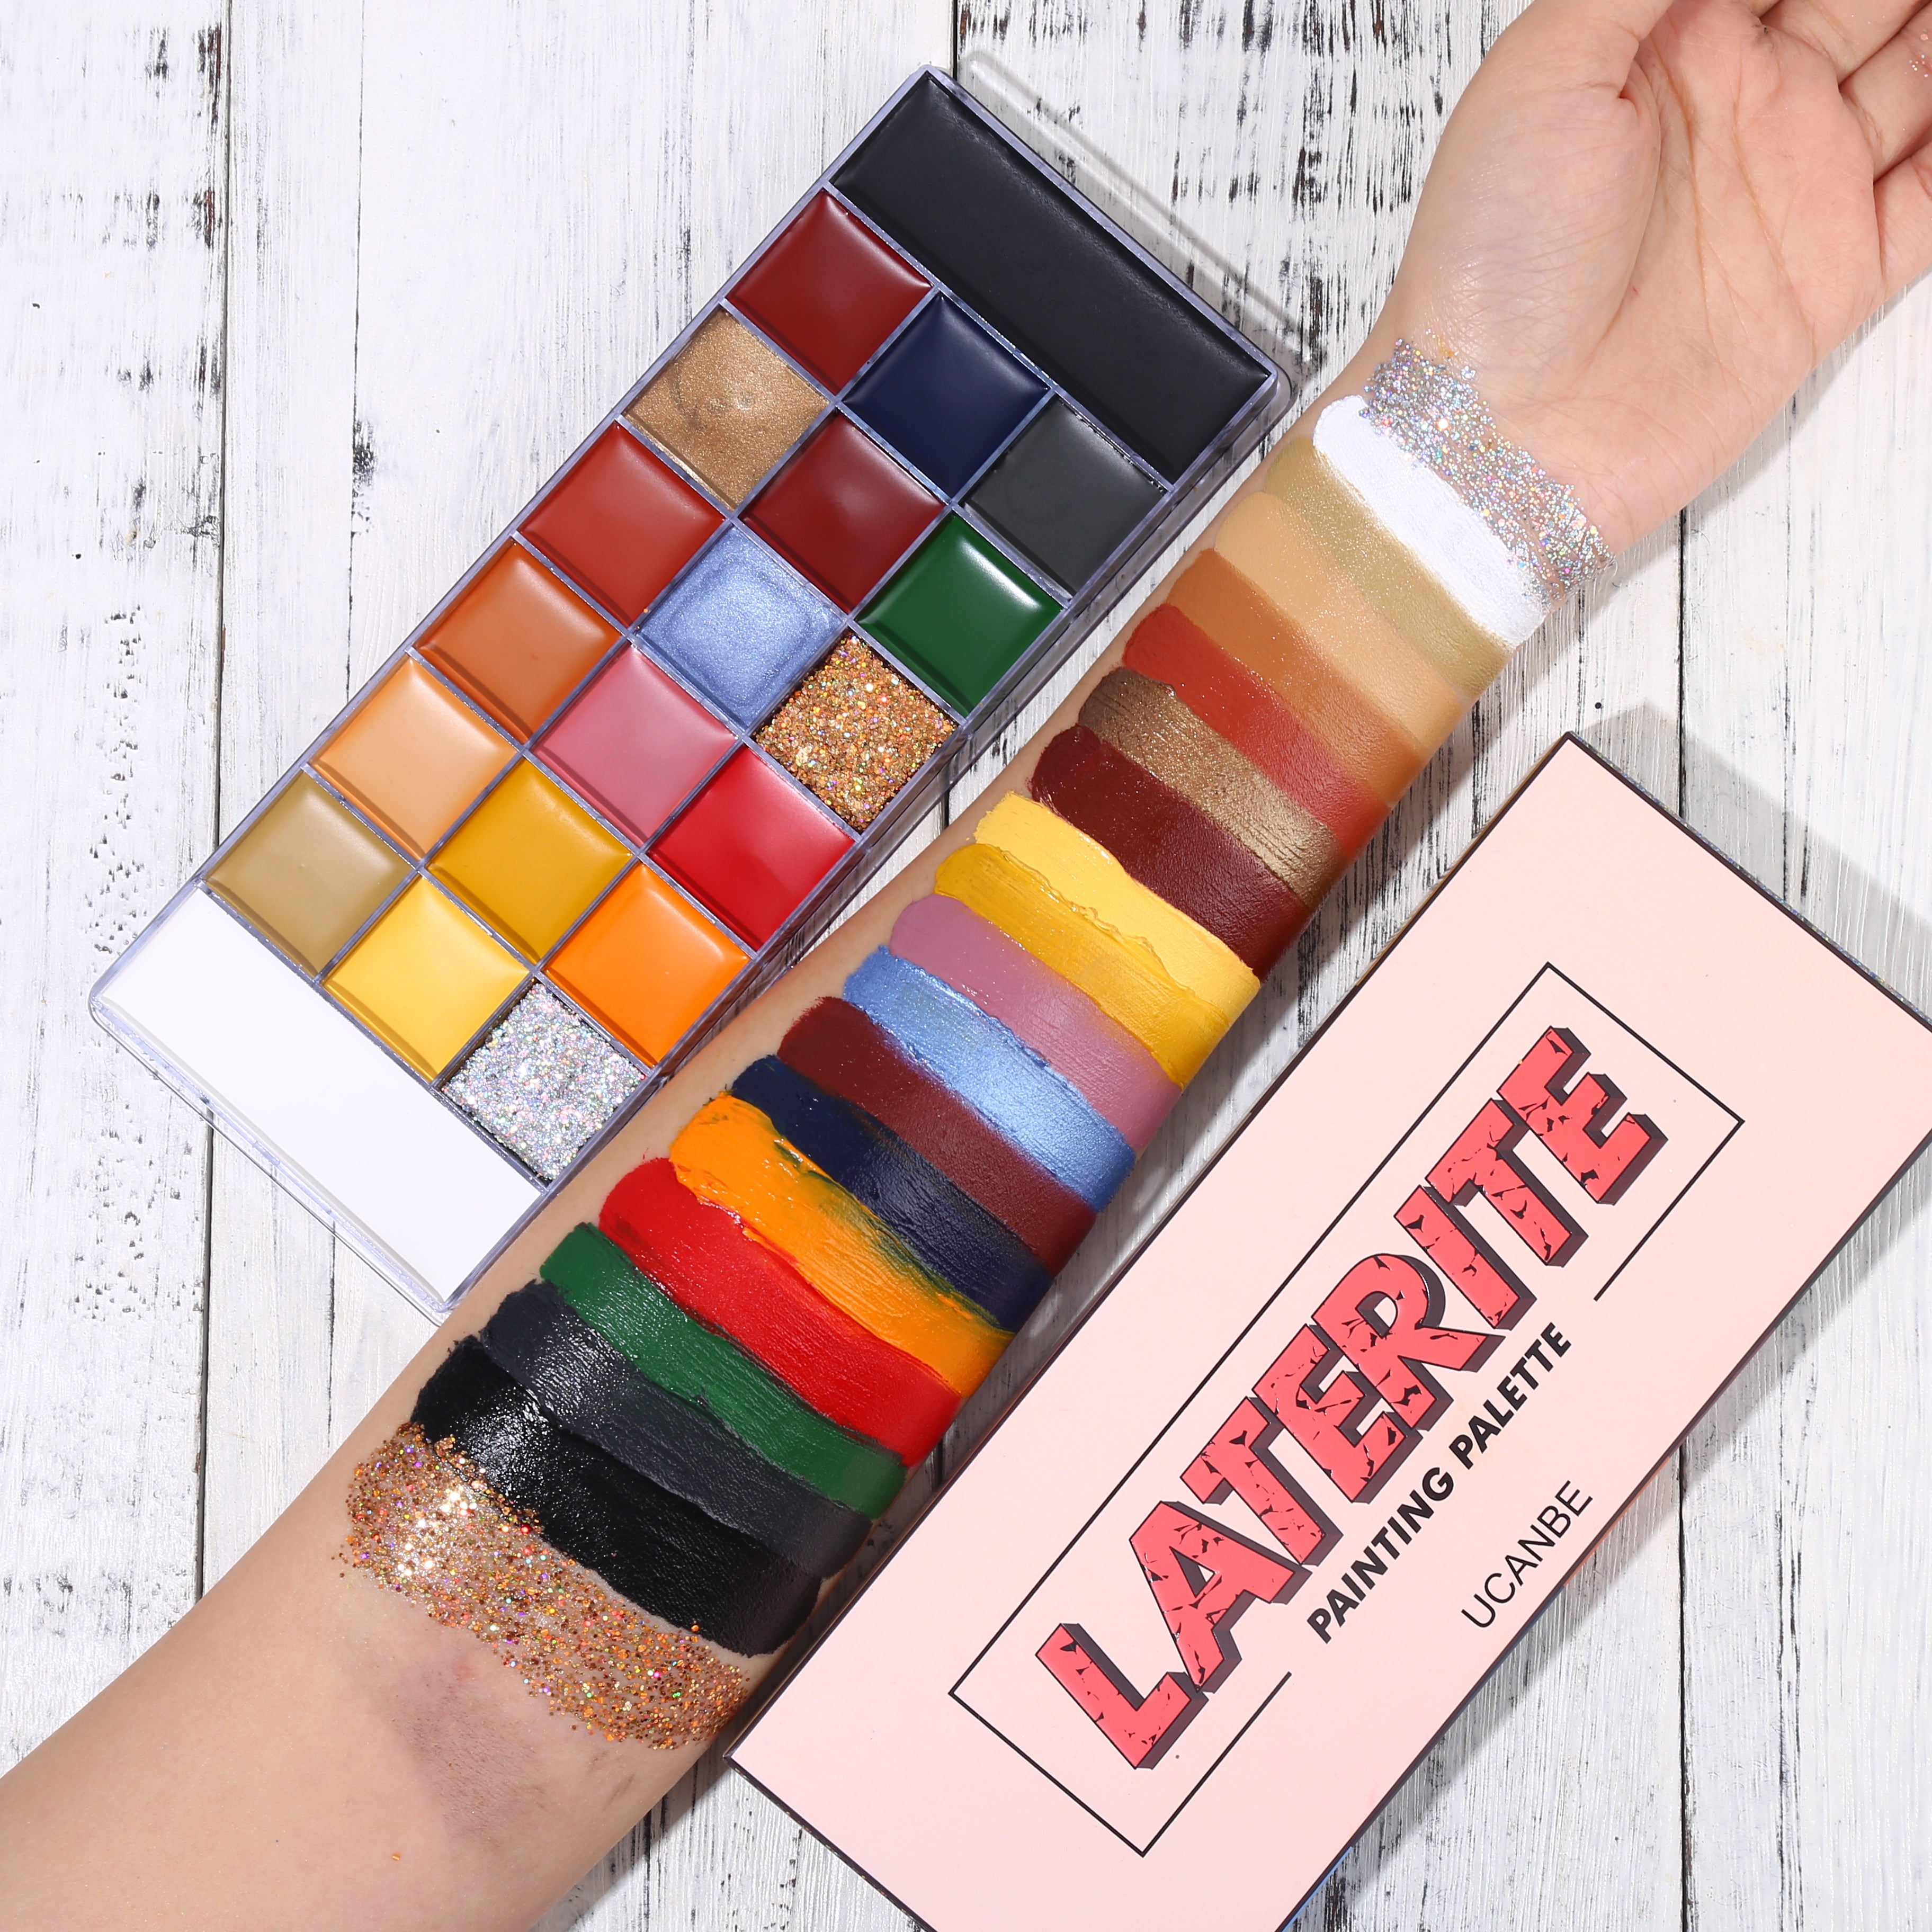 UCANBE 20 Colors Body Face Paint Palette for Adults Kids - Art